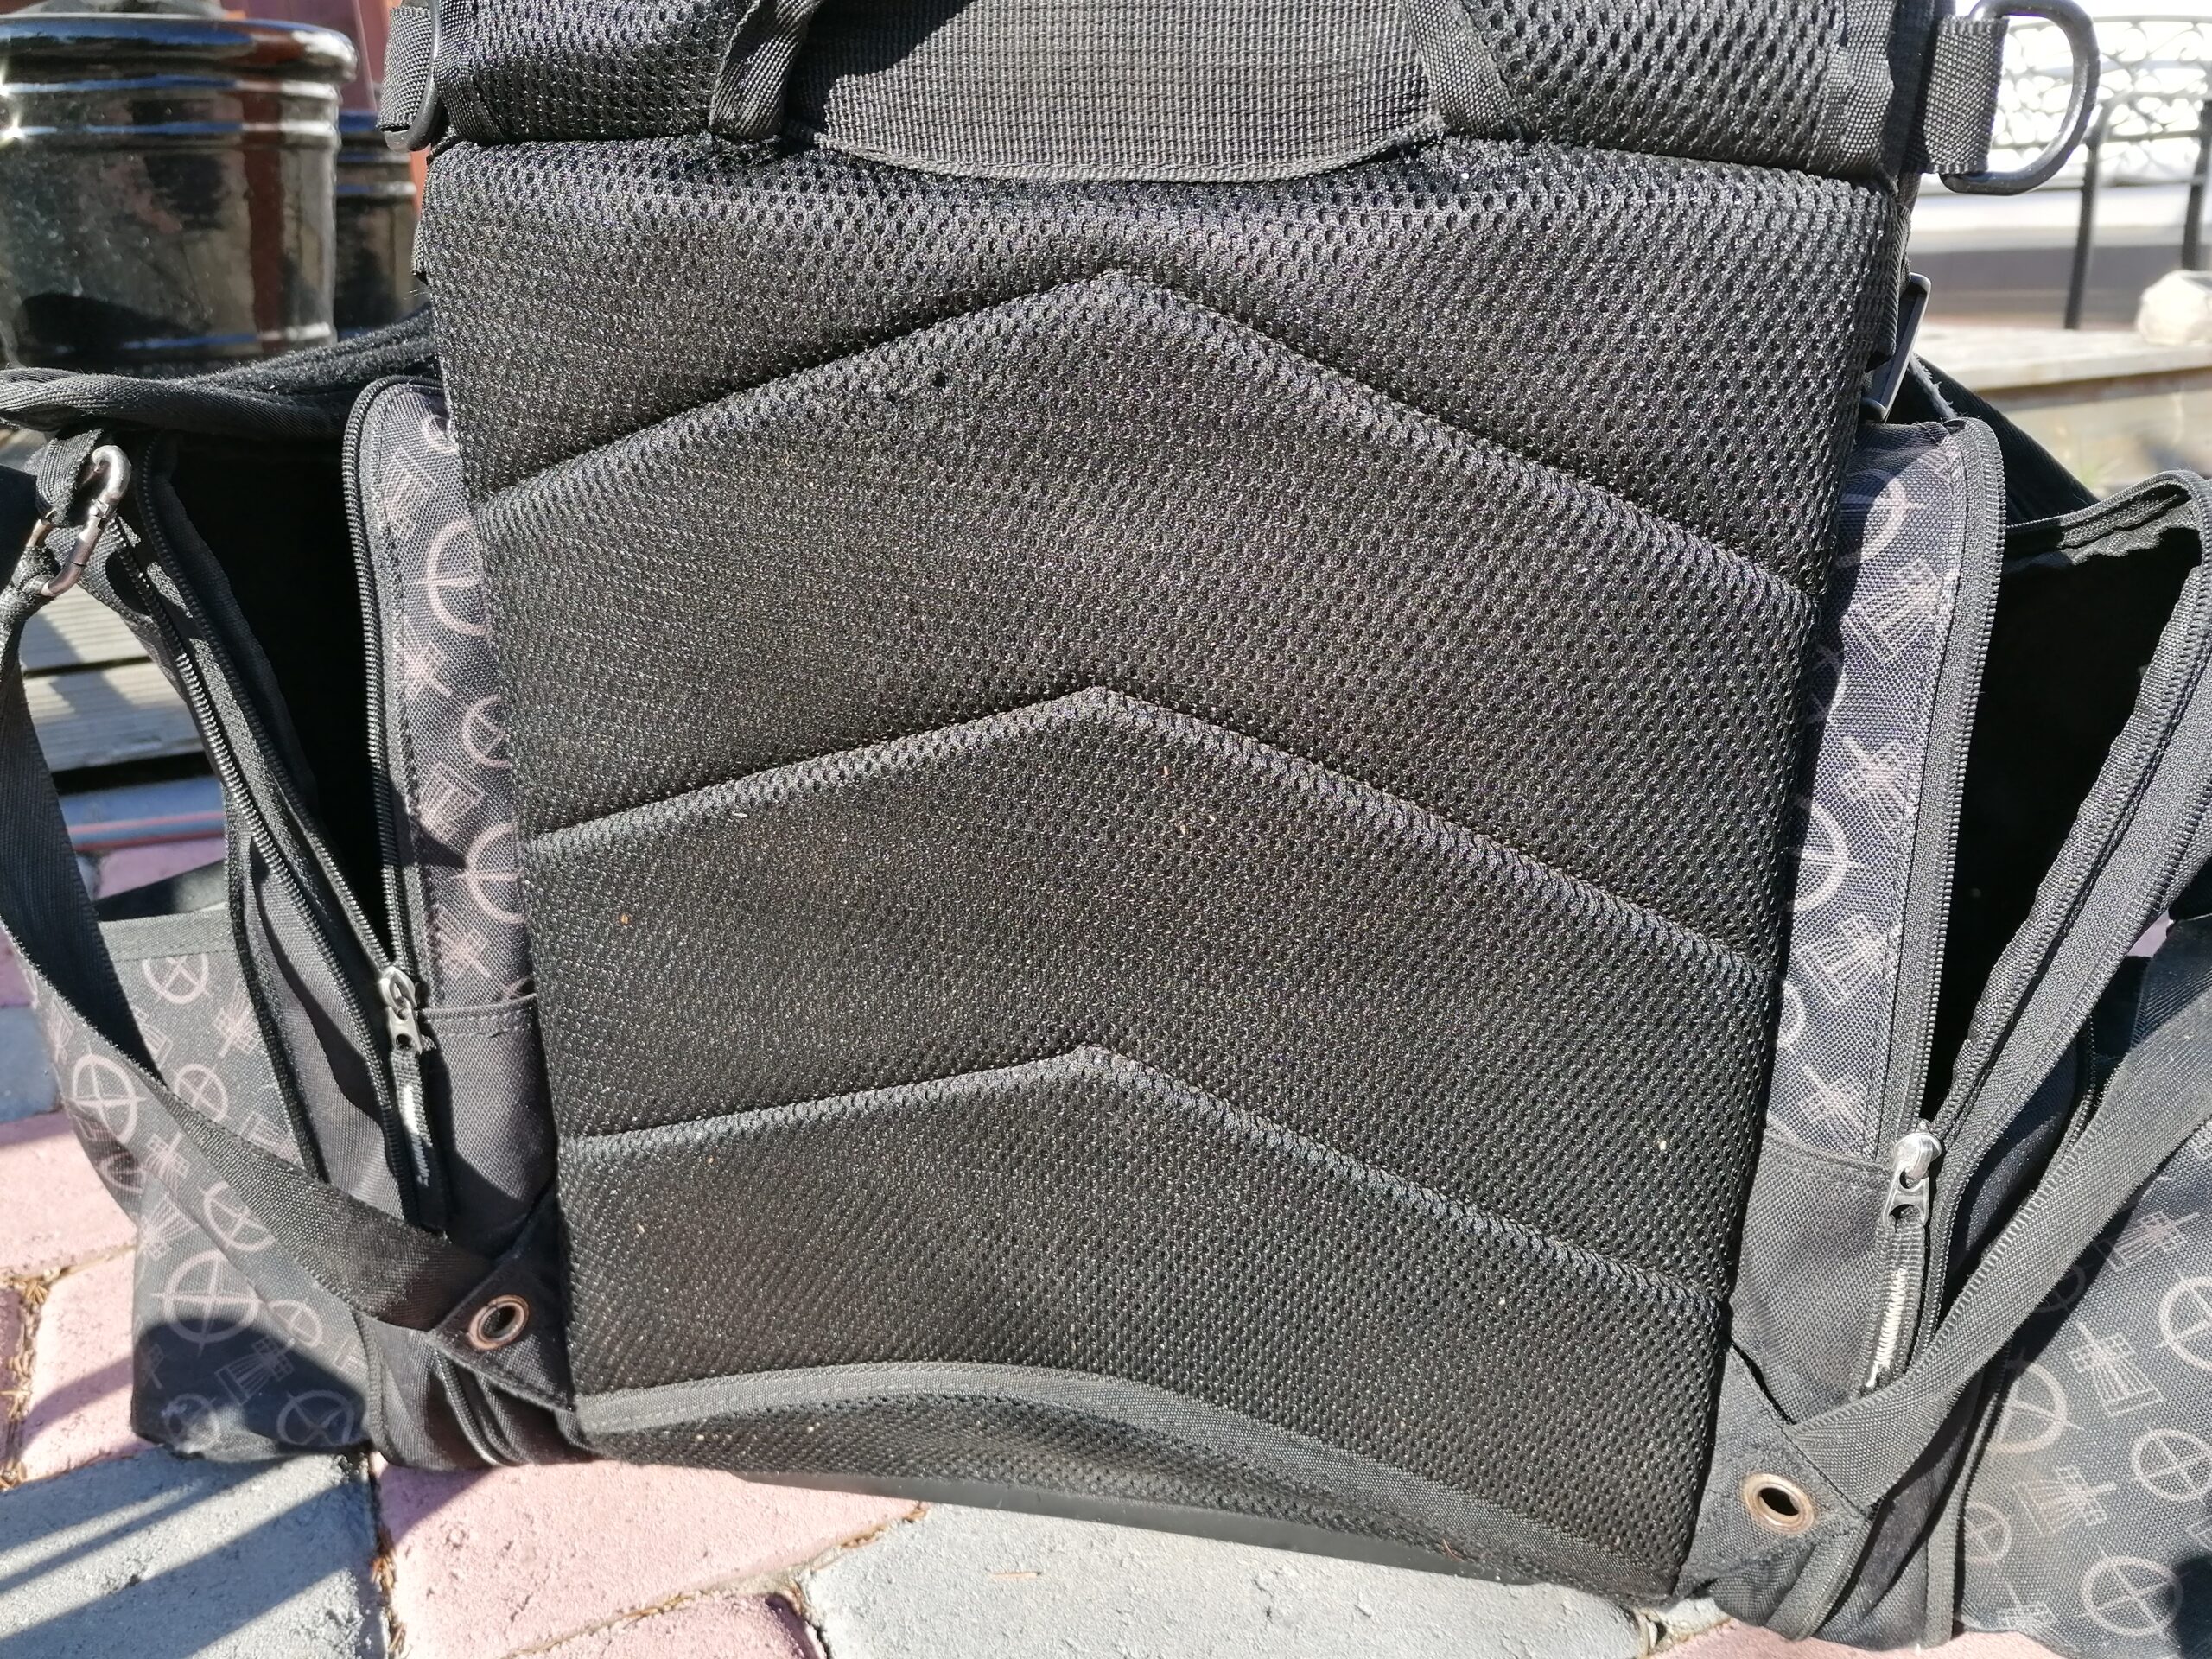 Innova Super heropack bag review photo 11